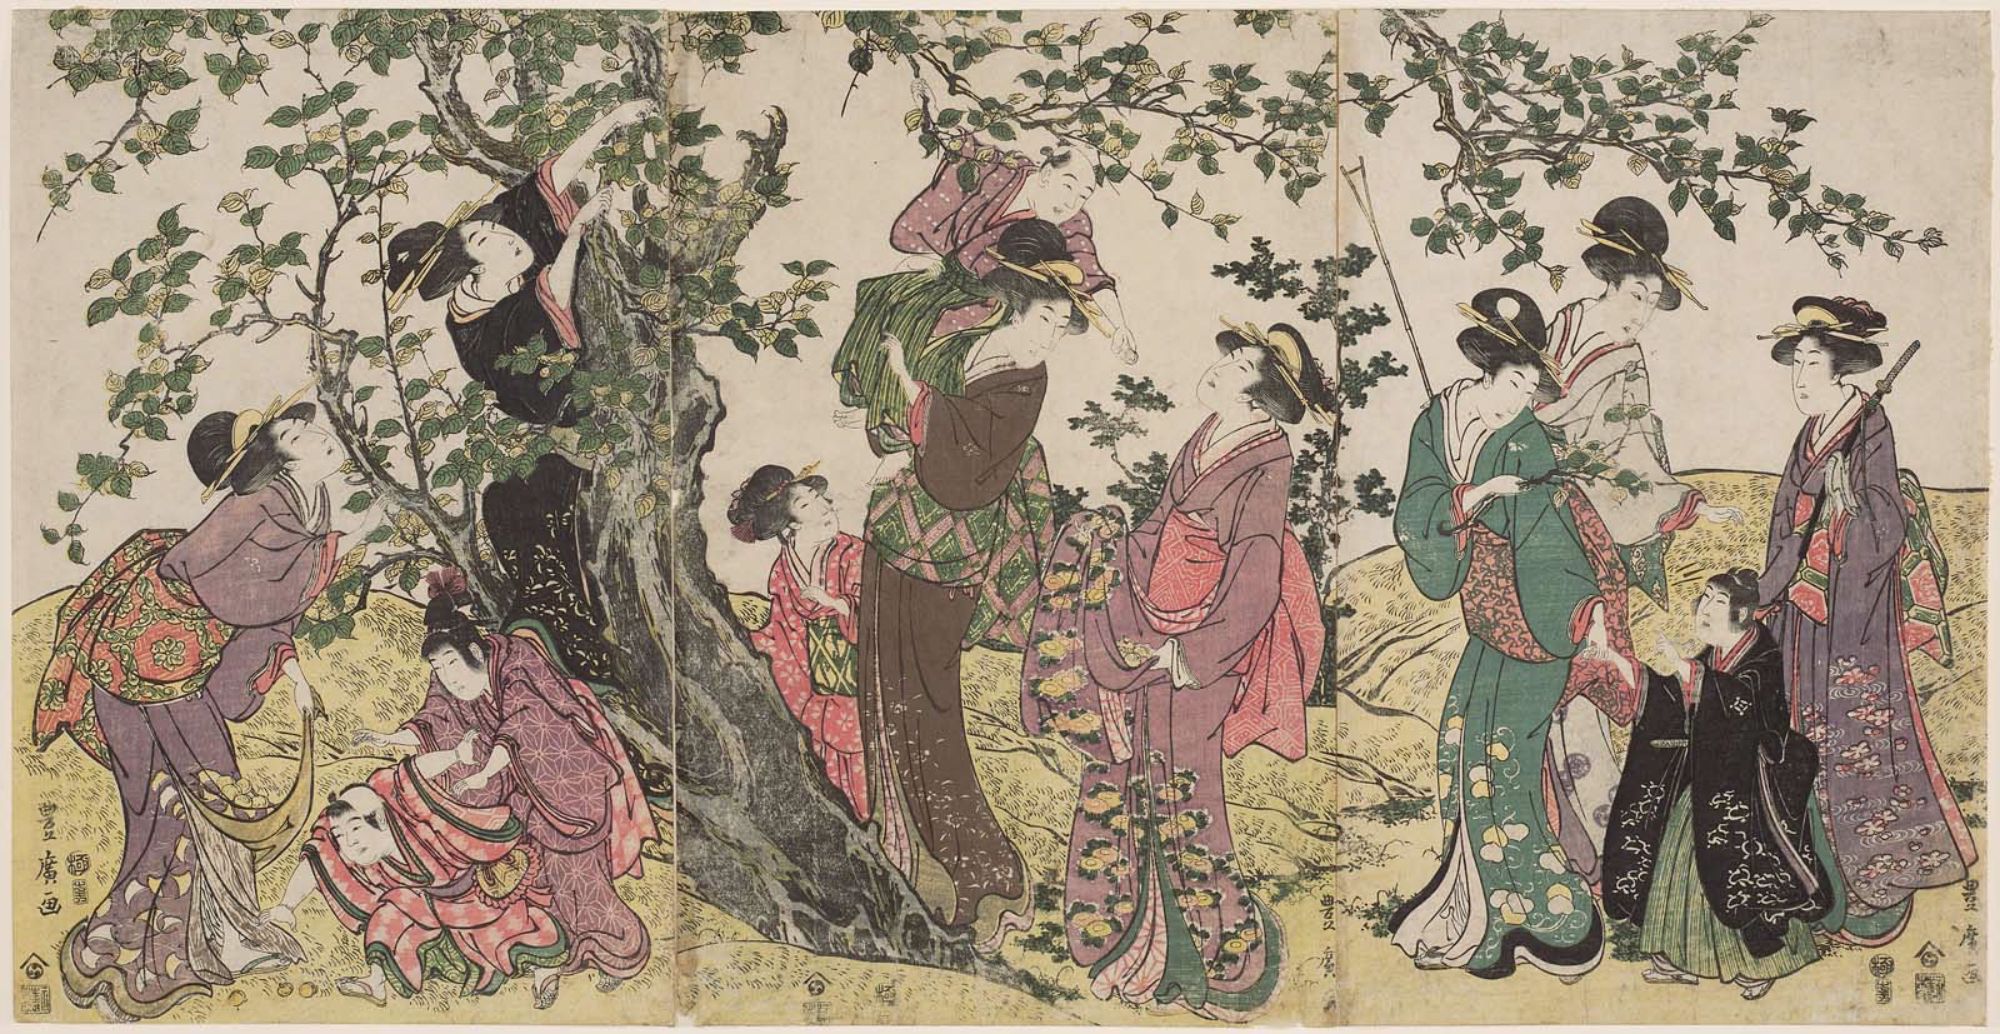 Utagawa Toyohiro: Women and Children Gathering Fruit from a Tree